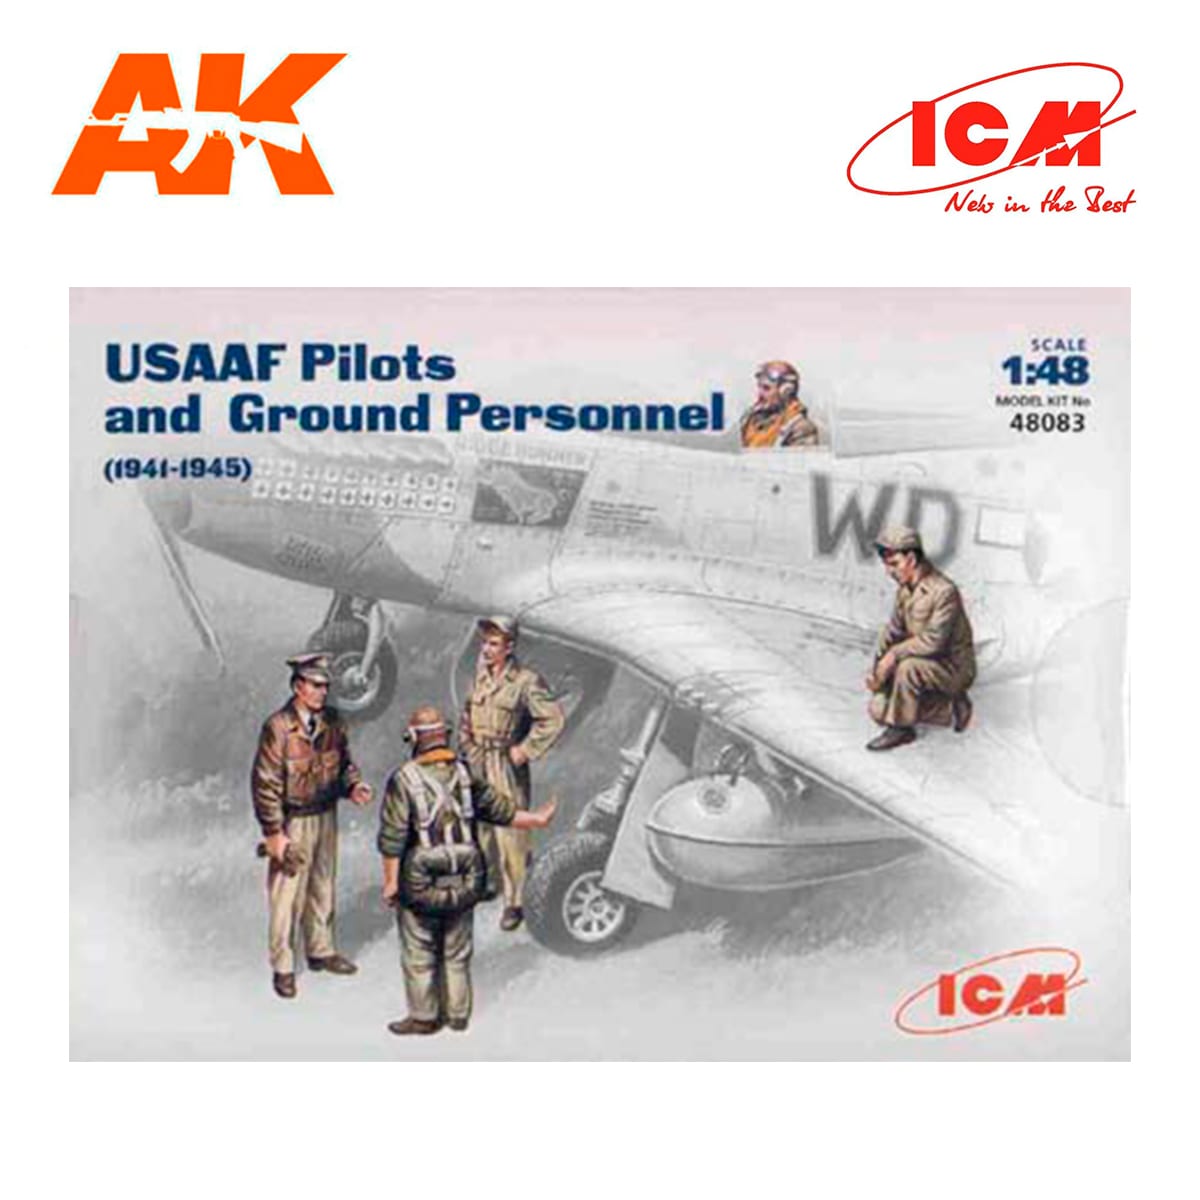 USAAF Pilots and Ground Personnel (1941-1945)  (5 figures – 3 pilots, 2 mechanics) 1/48